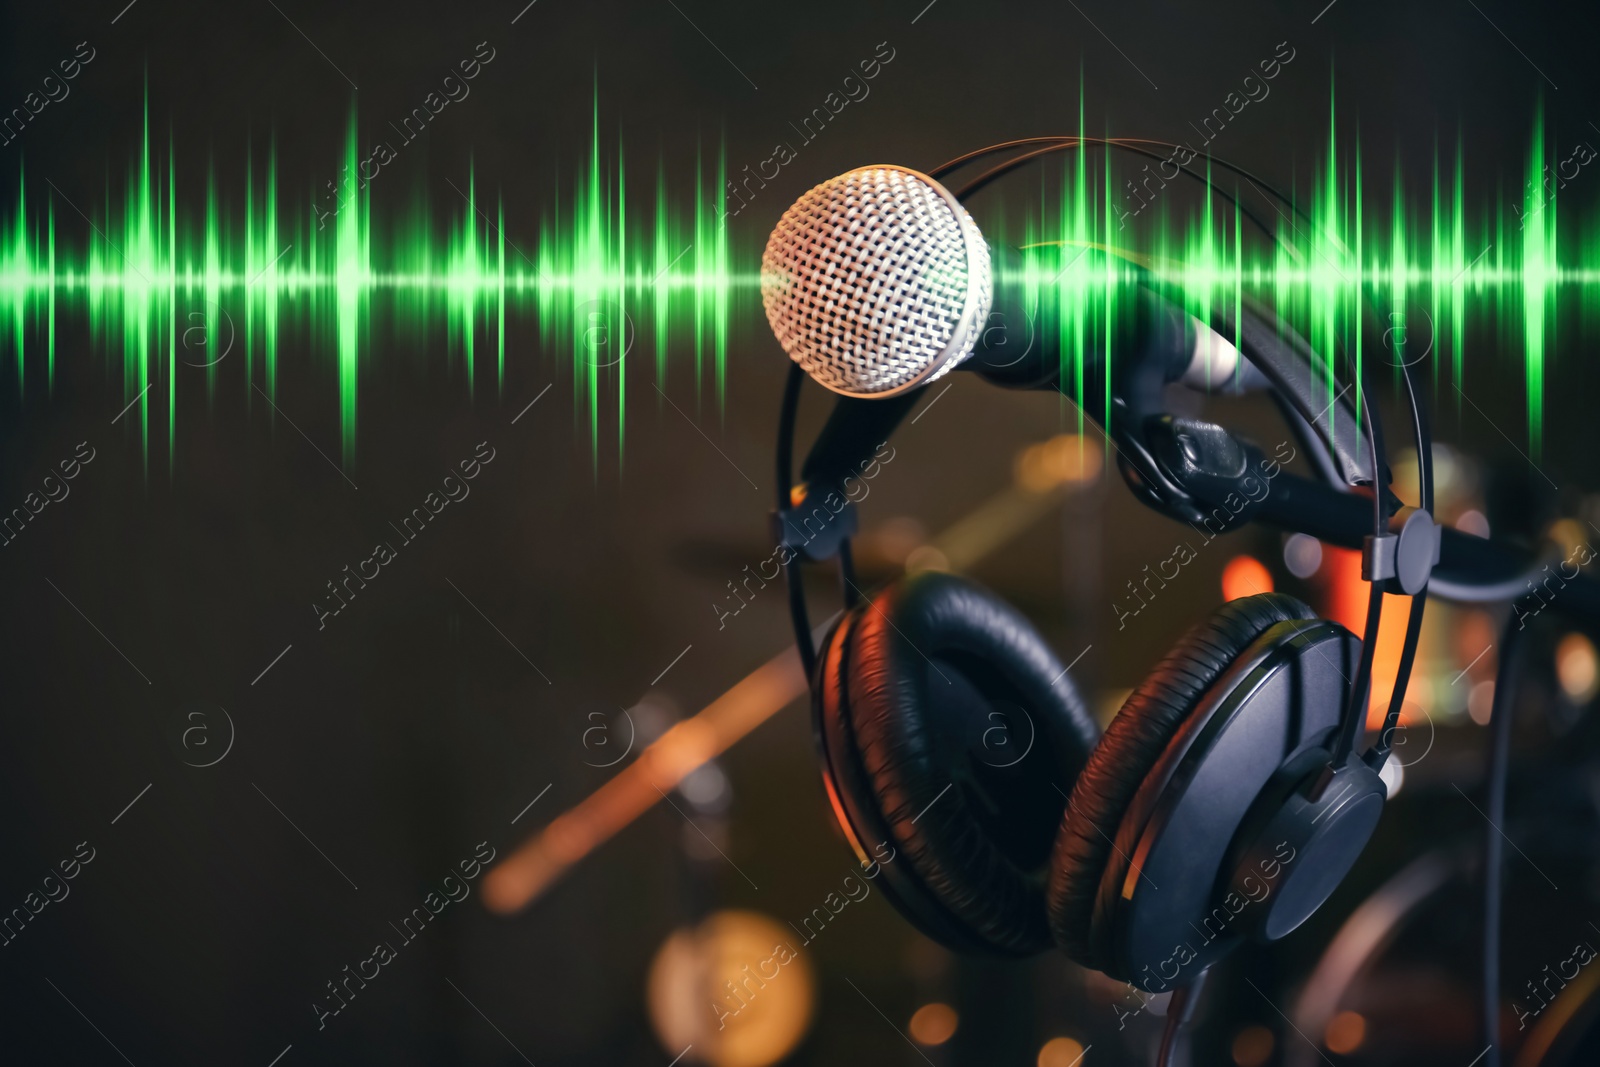 Image of Headphones, microphone and radio wave on dark background